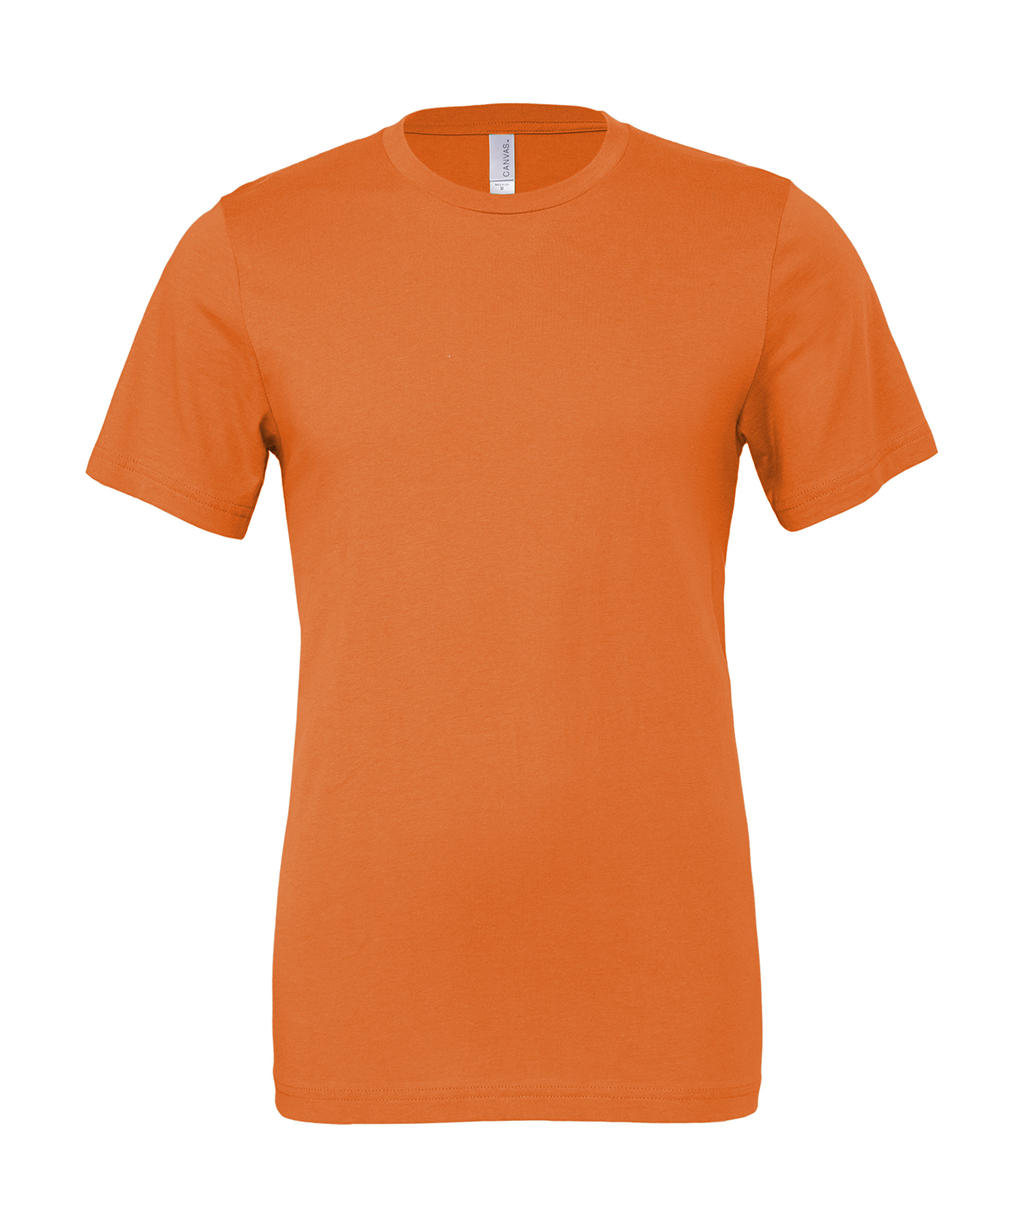  Unisex Jersey Short Sleeve Tee in Farbe Orange